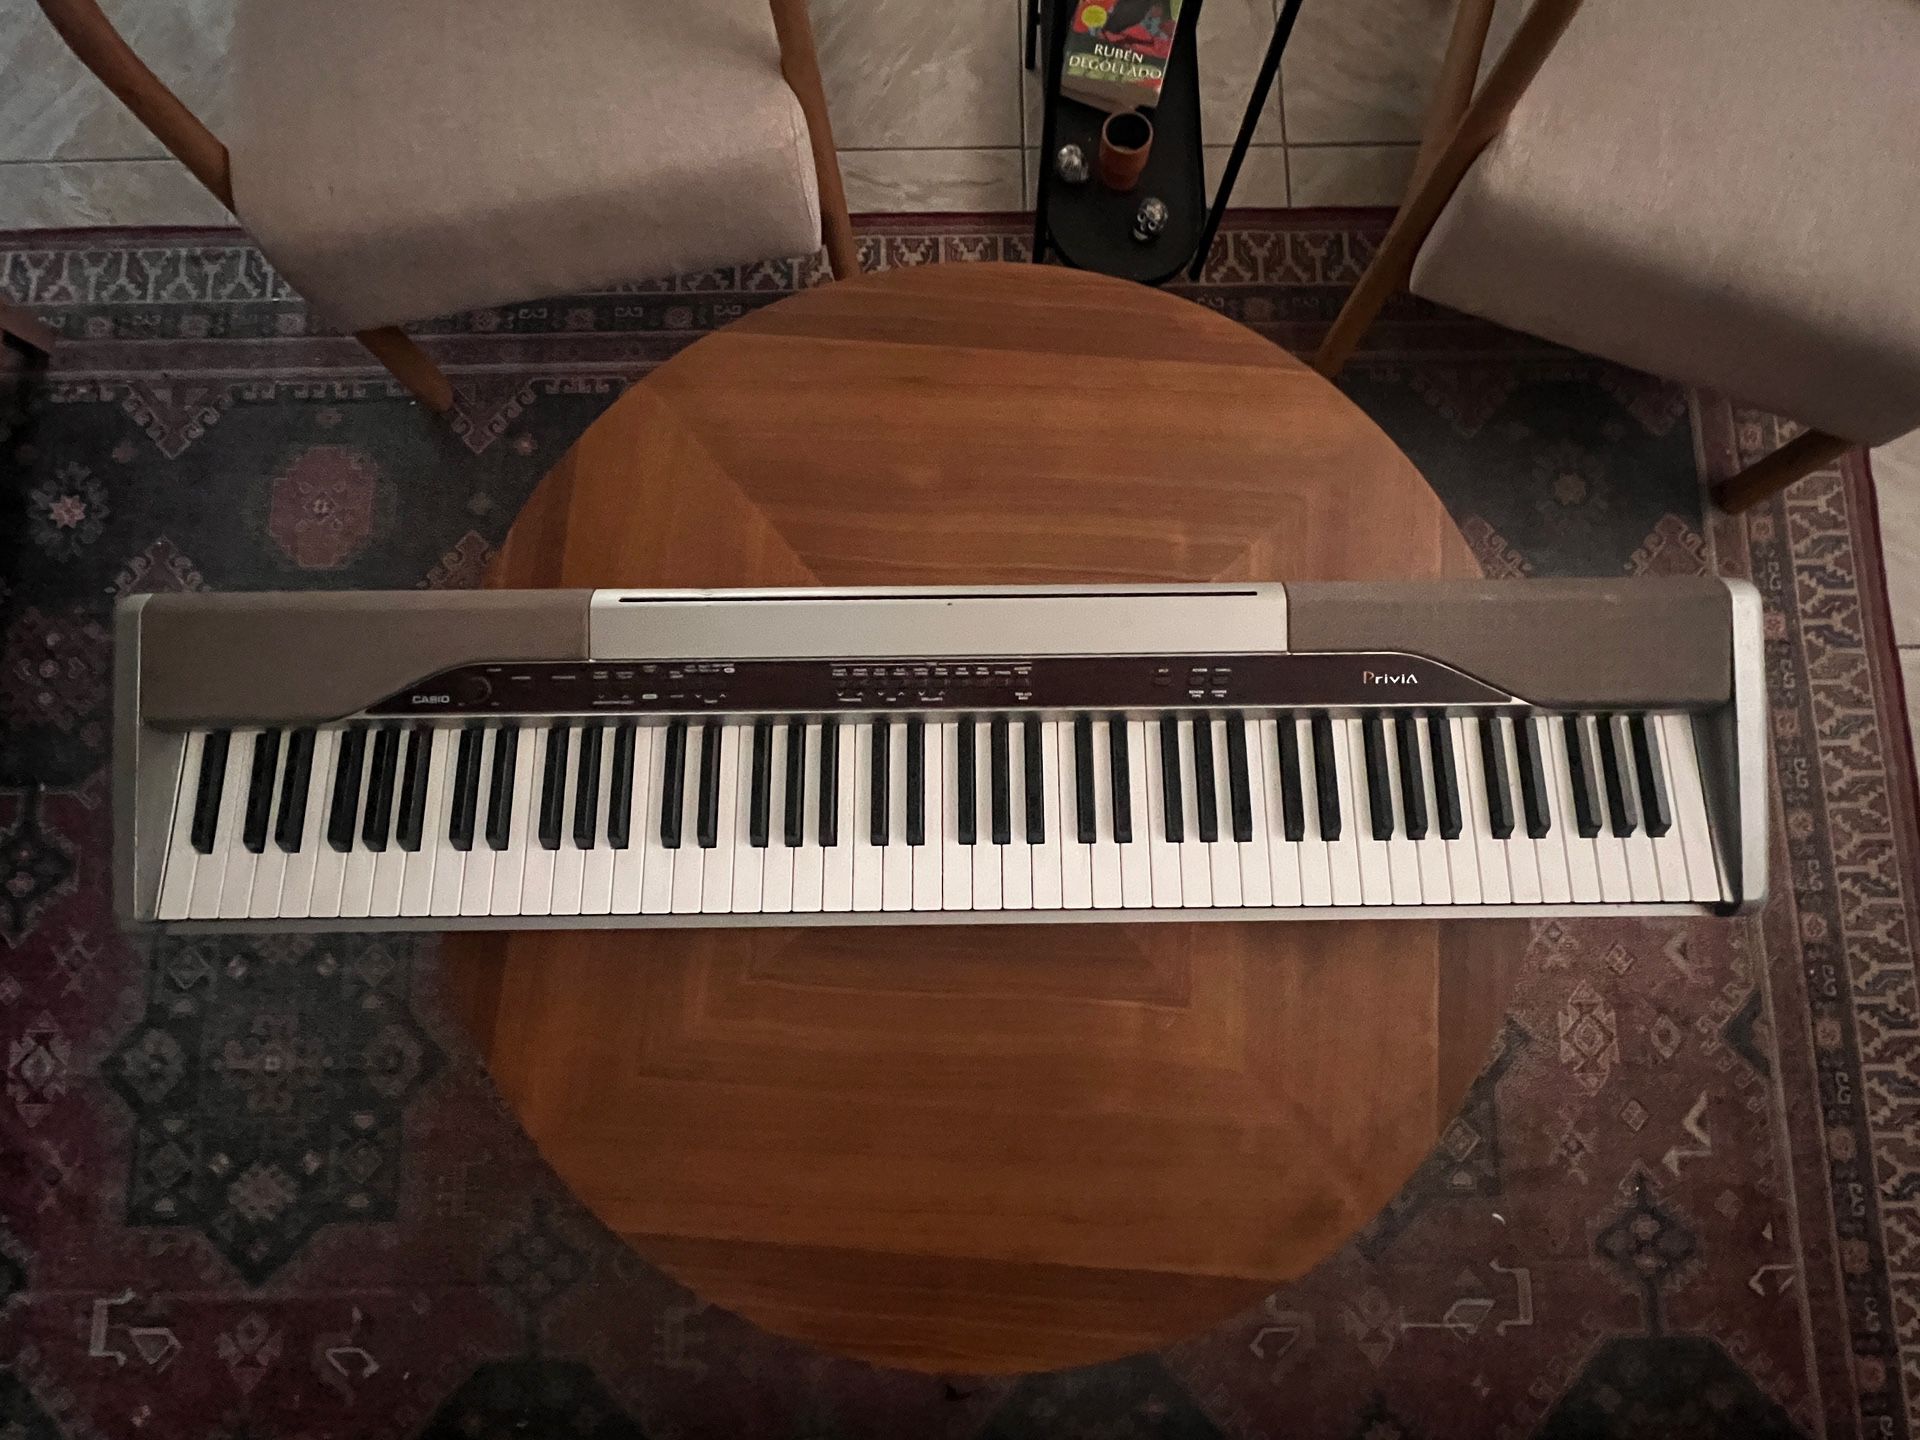 Casio Privia 88-key Piano/keyboard